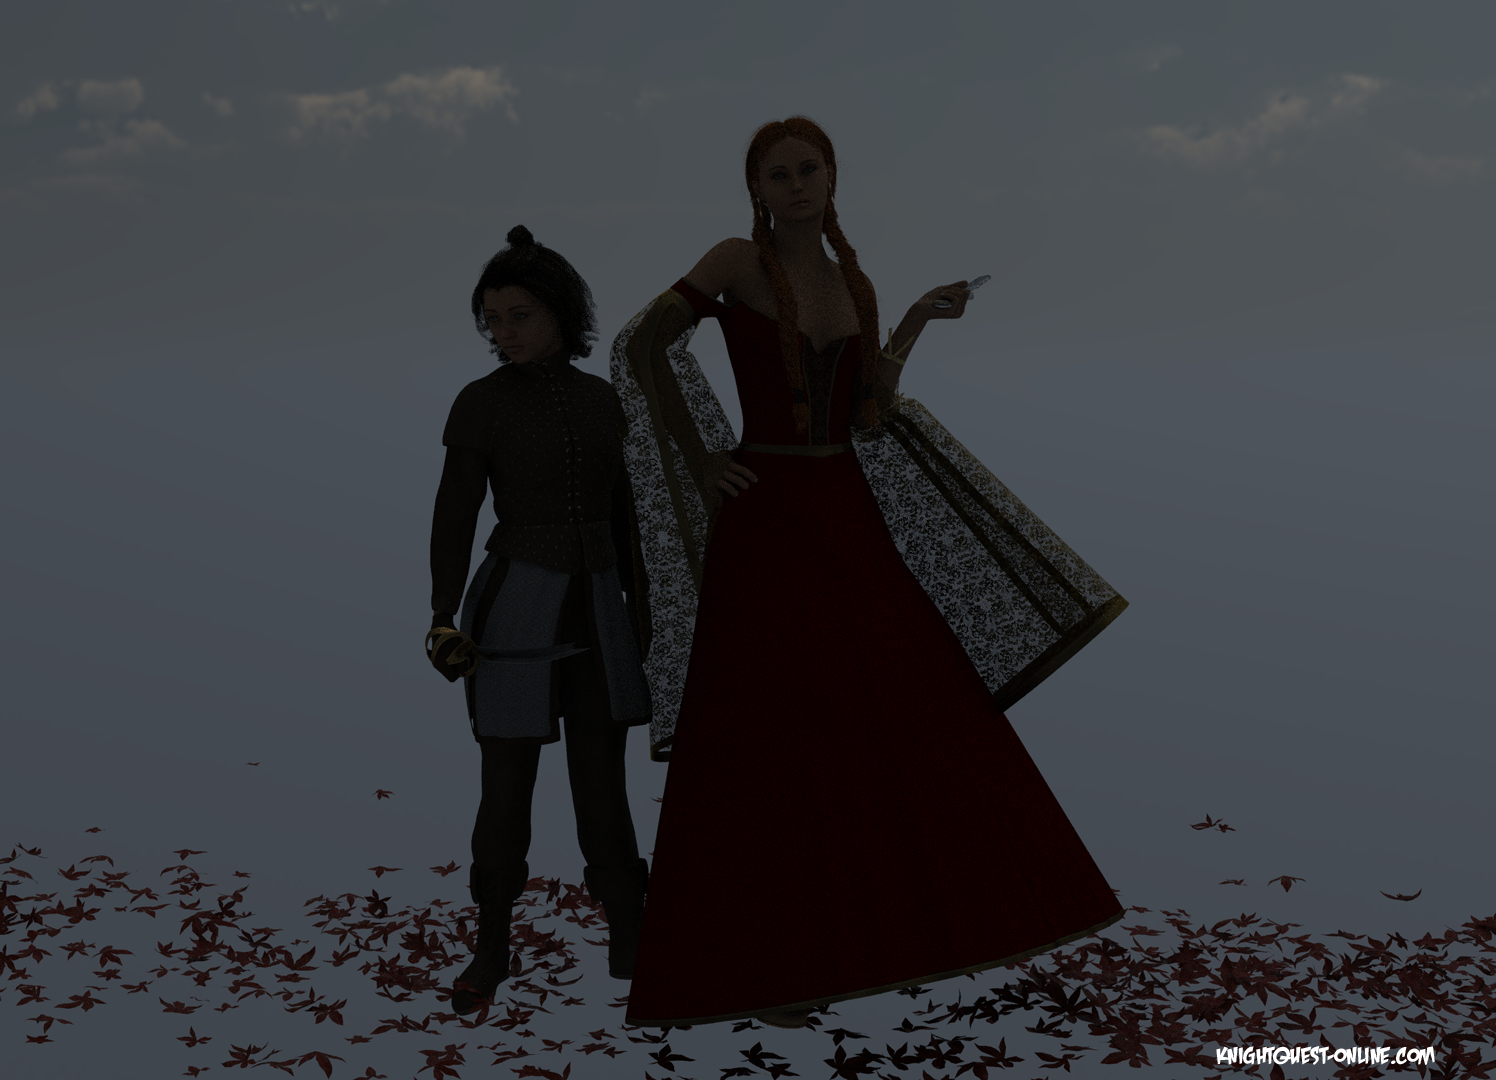 Sansa and Arya Stark